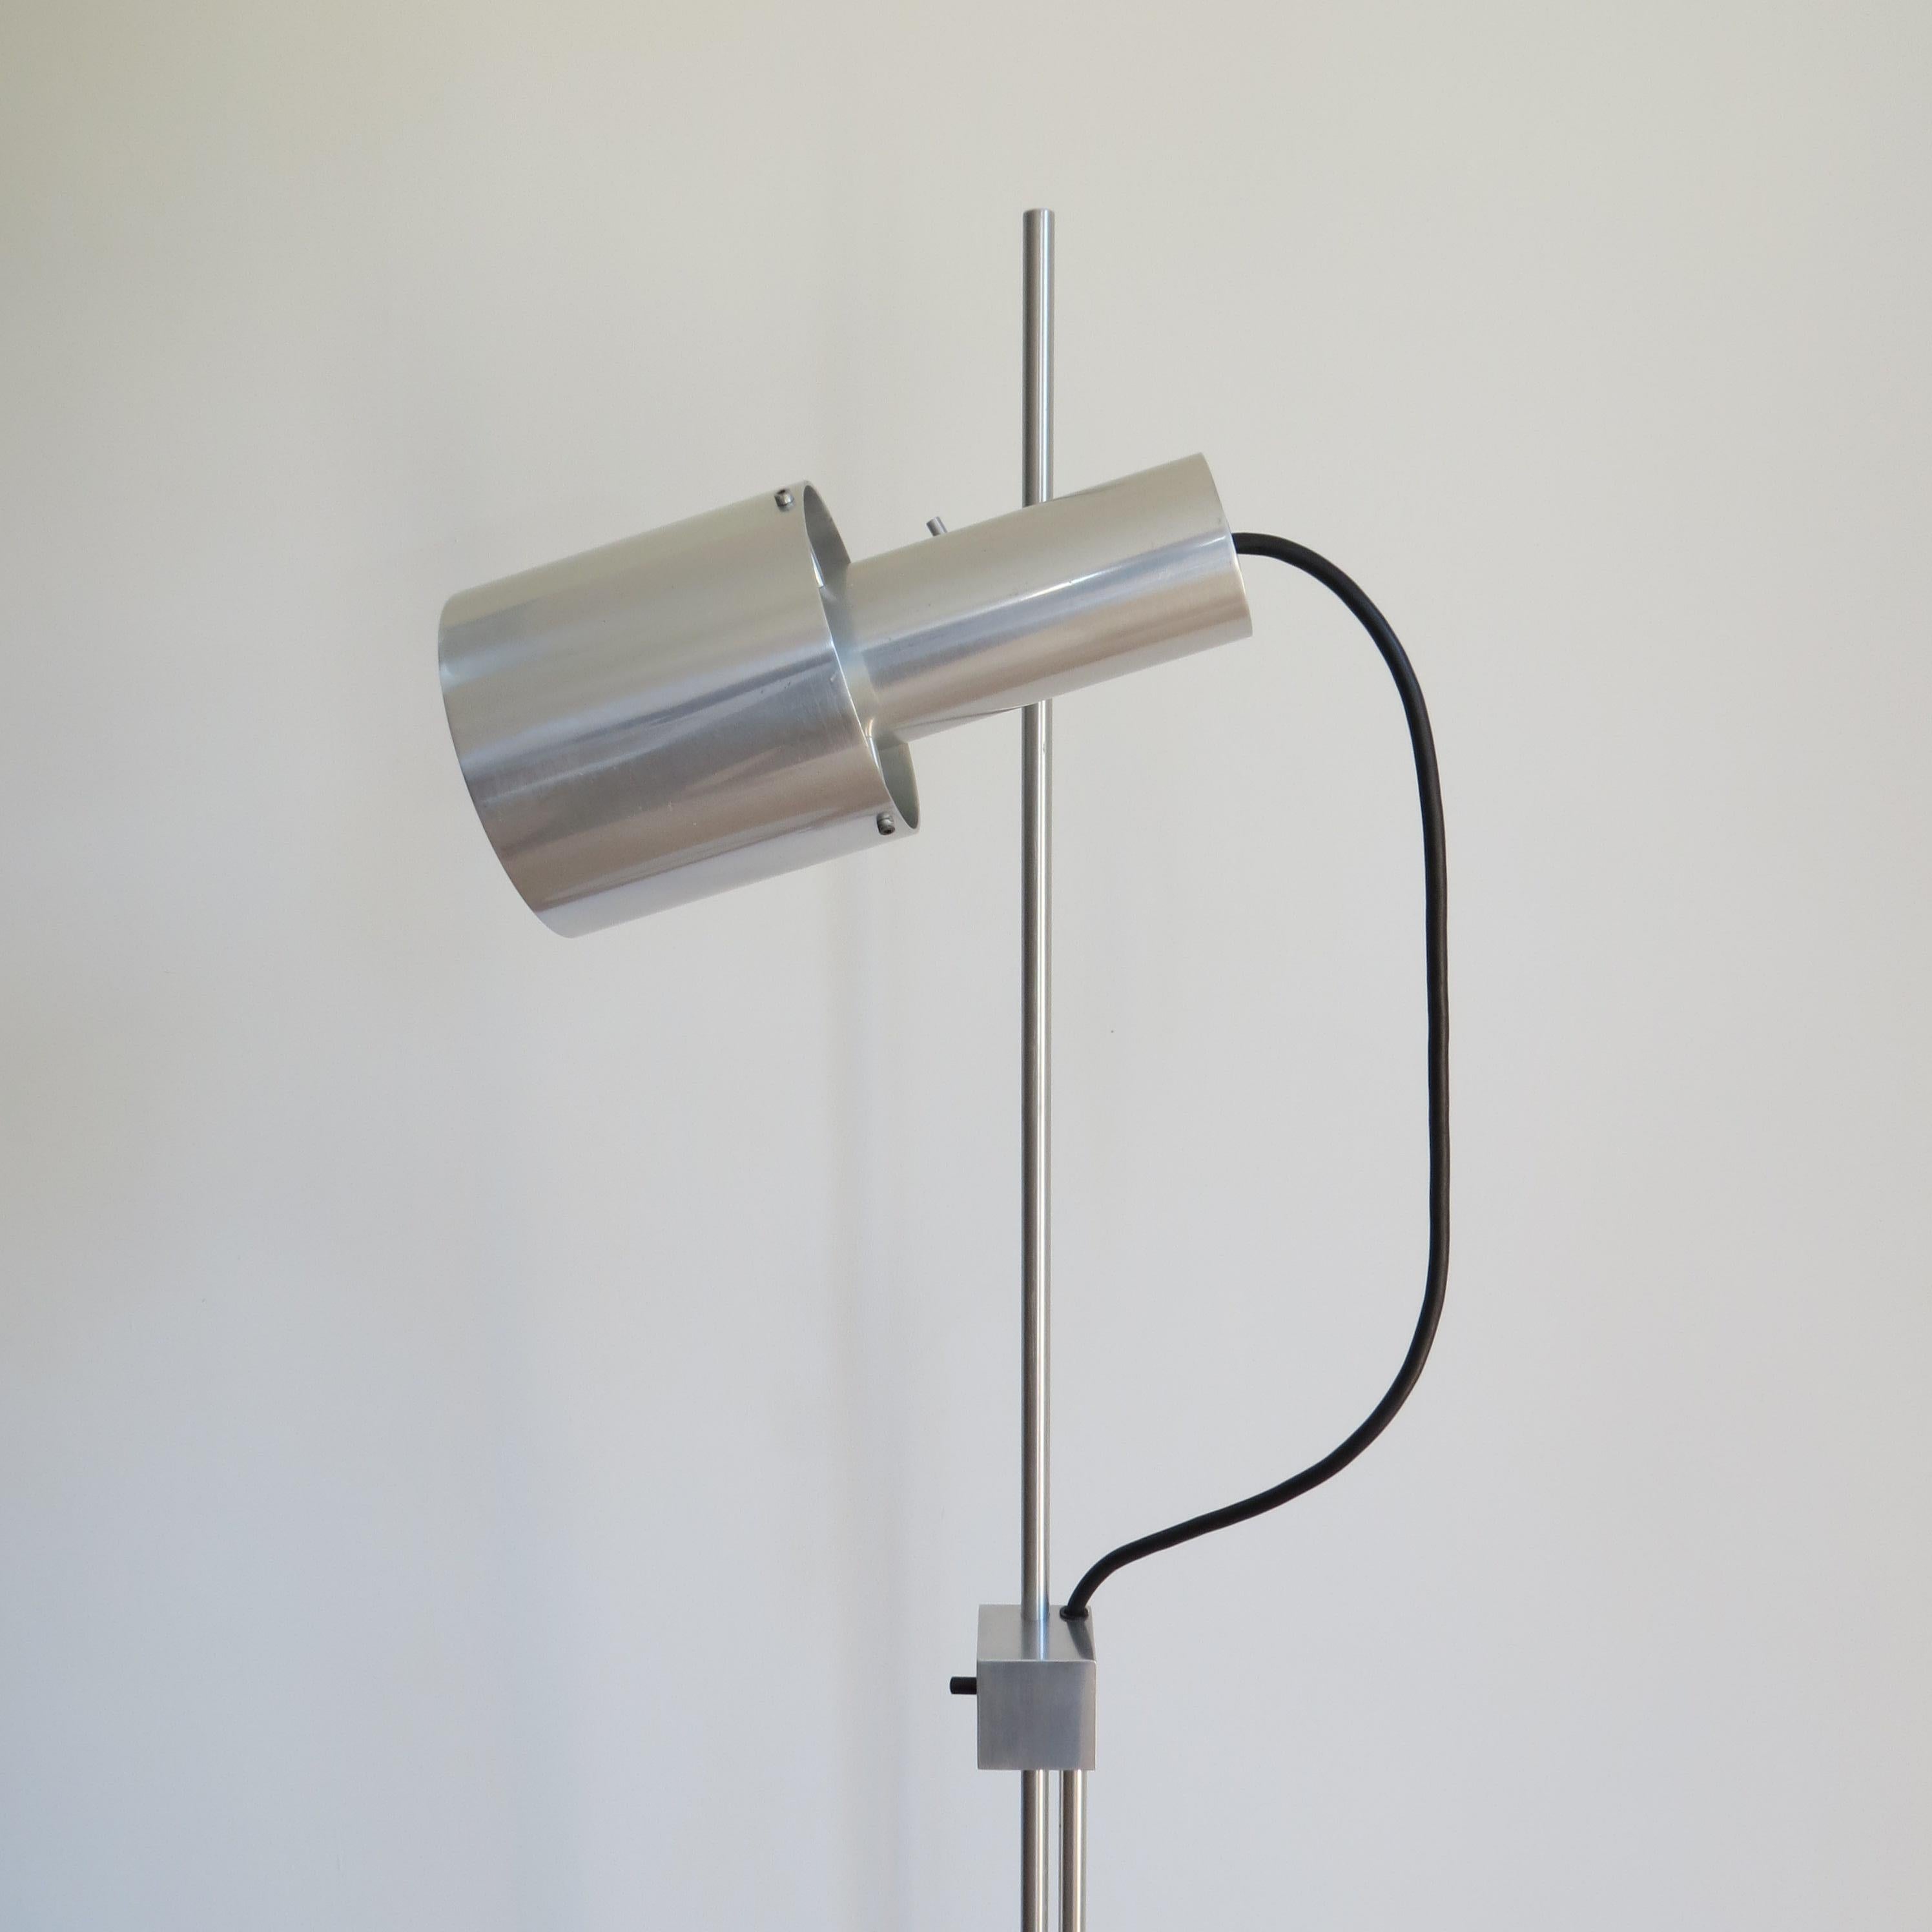 Machine-Made Rare Aluminium Floor Spot Lamp Peter Nelson 1960s Architectural Lighting